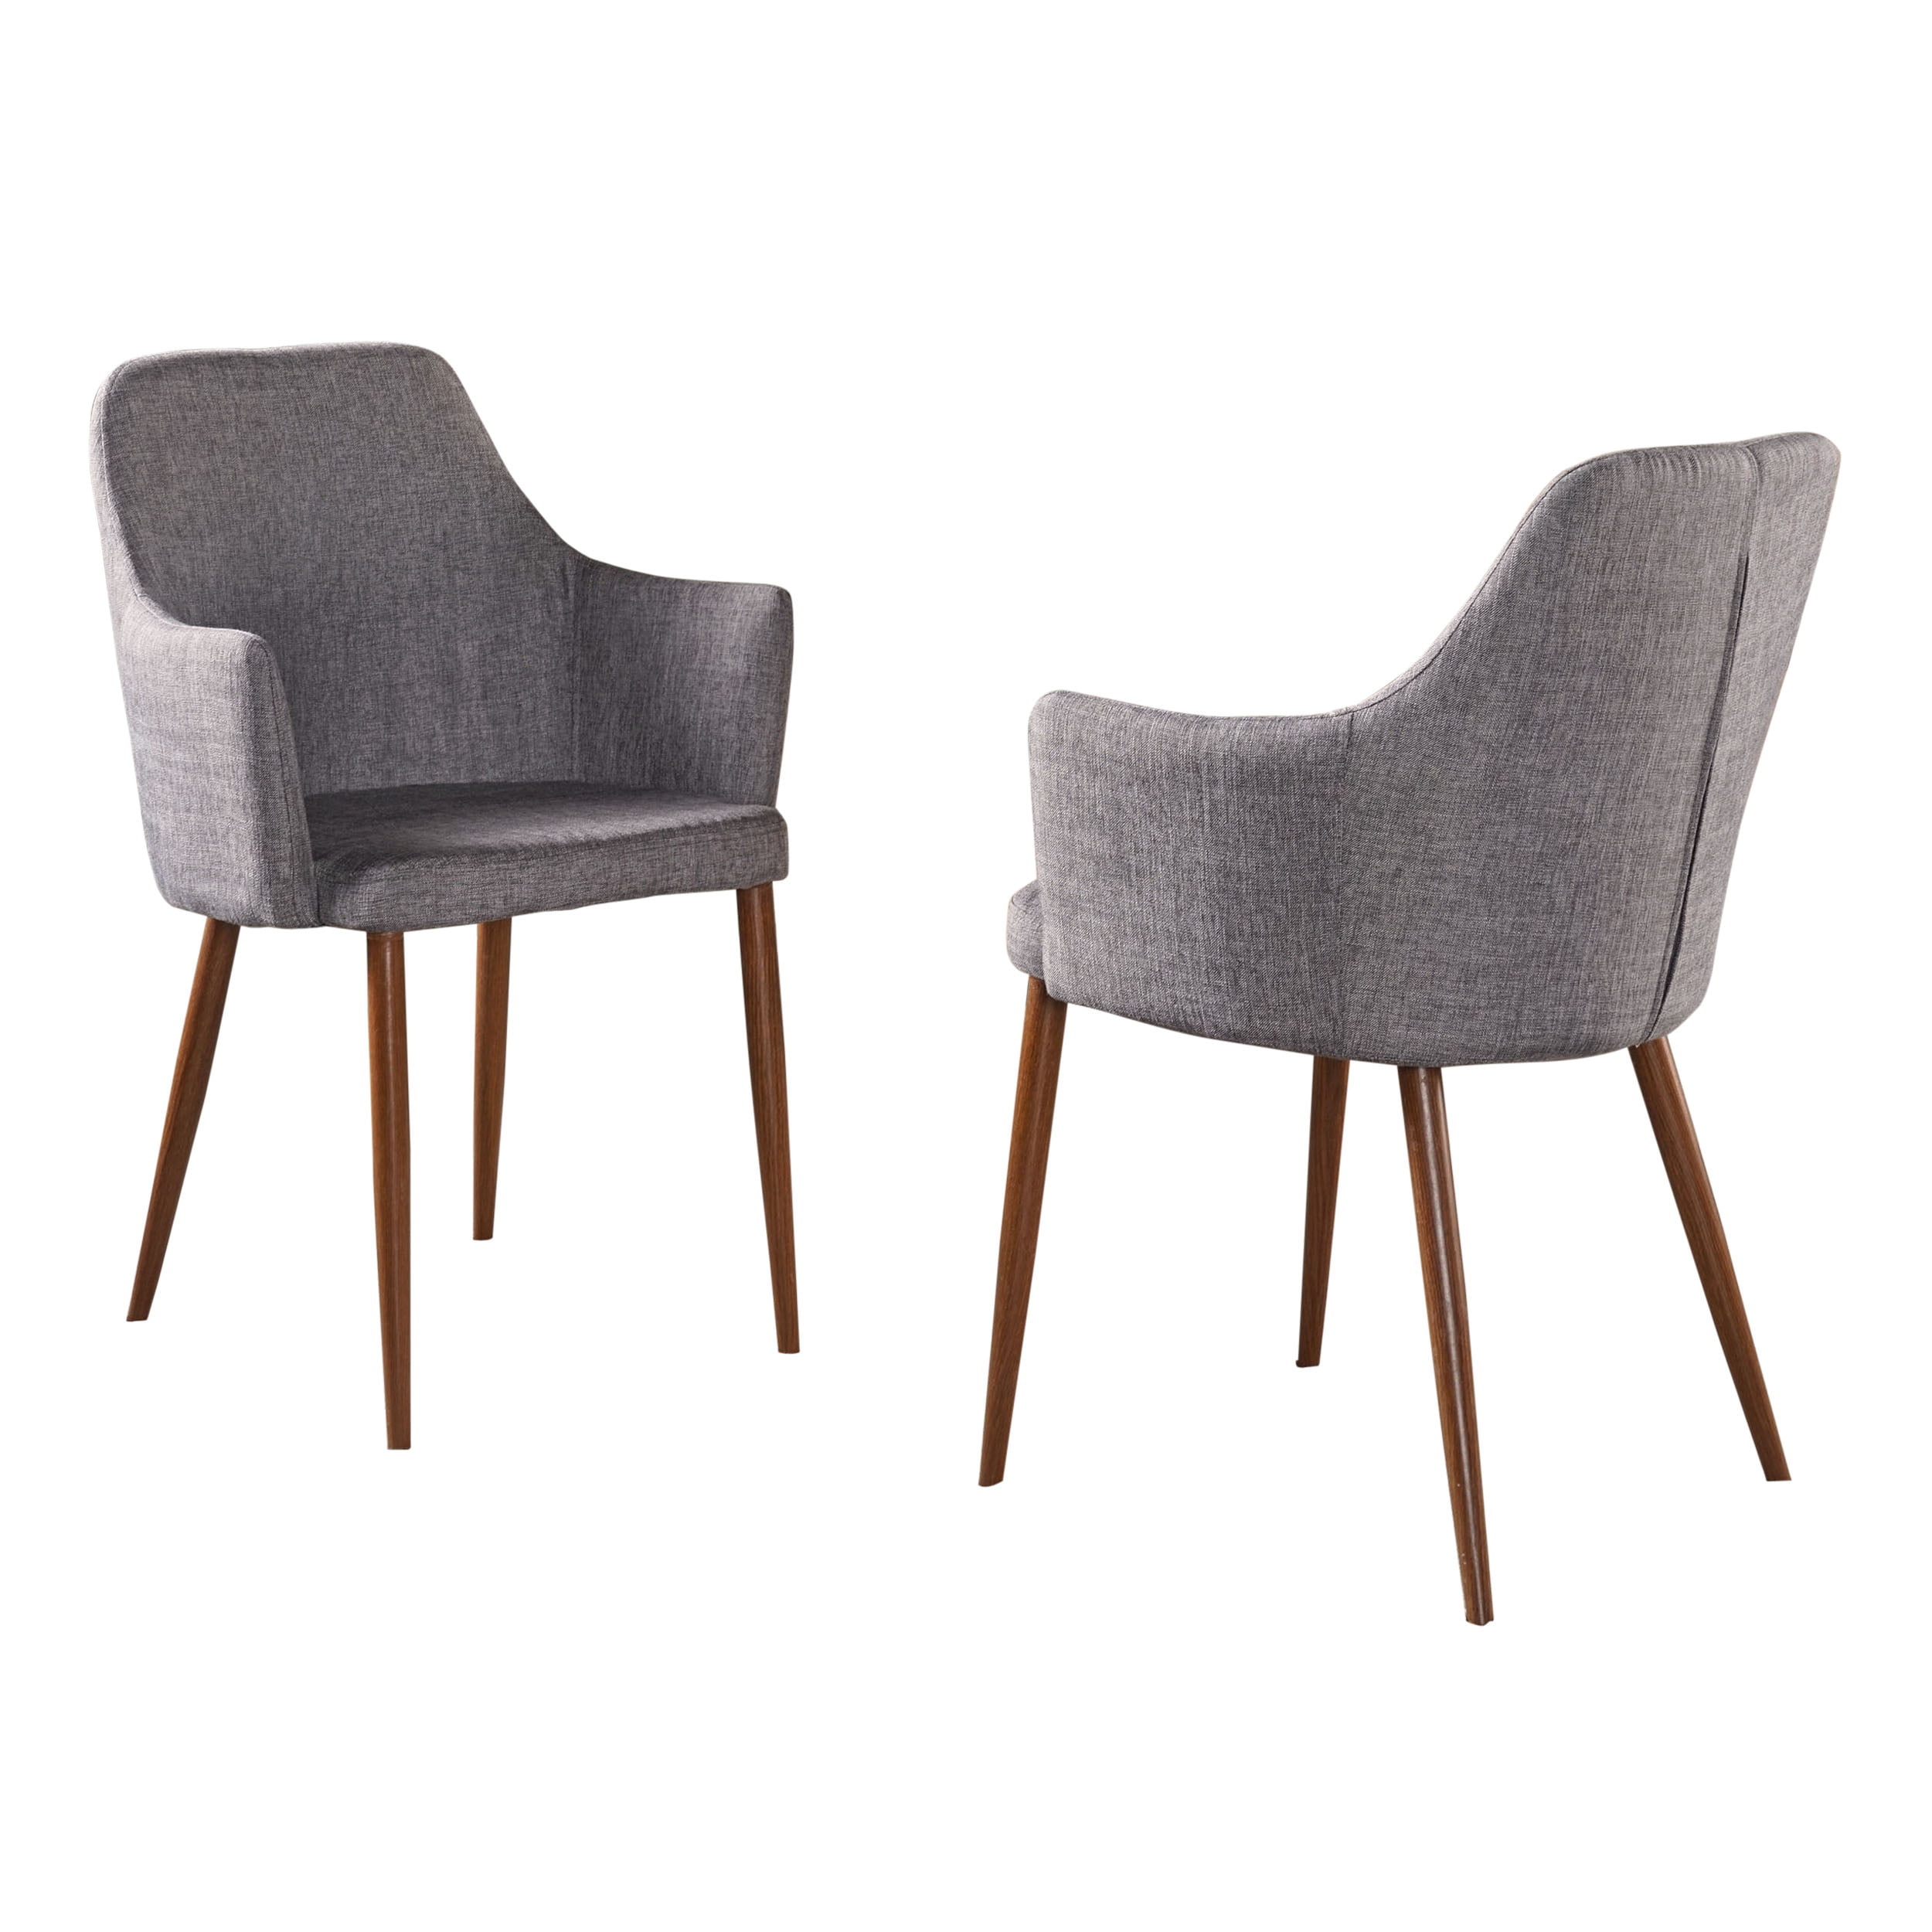 Gdf Studio Serra Mid Century Modern, Grey Dining Chairs With Light Wood Legs